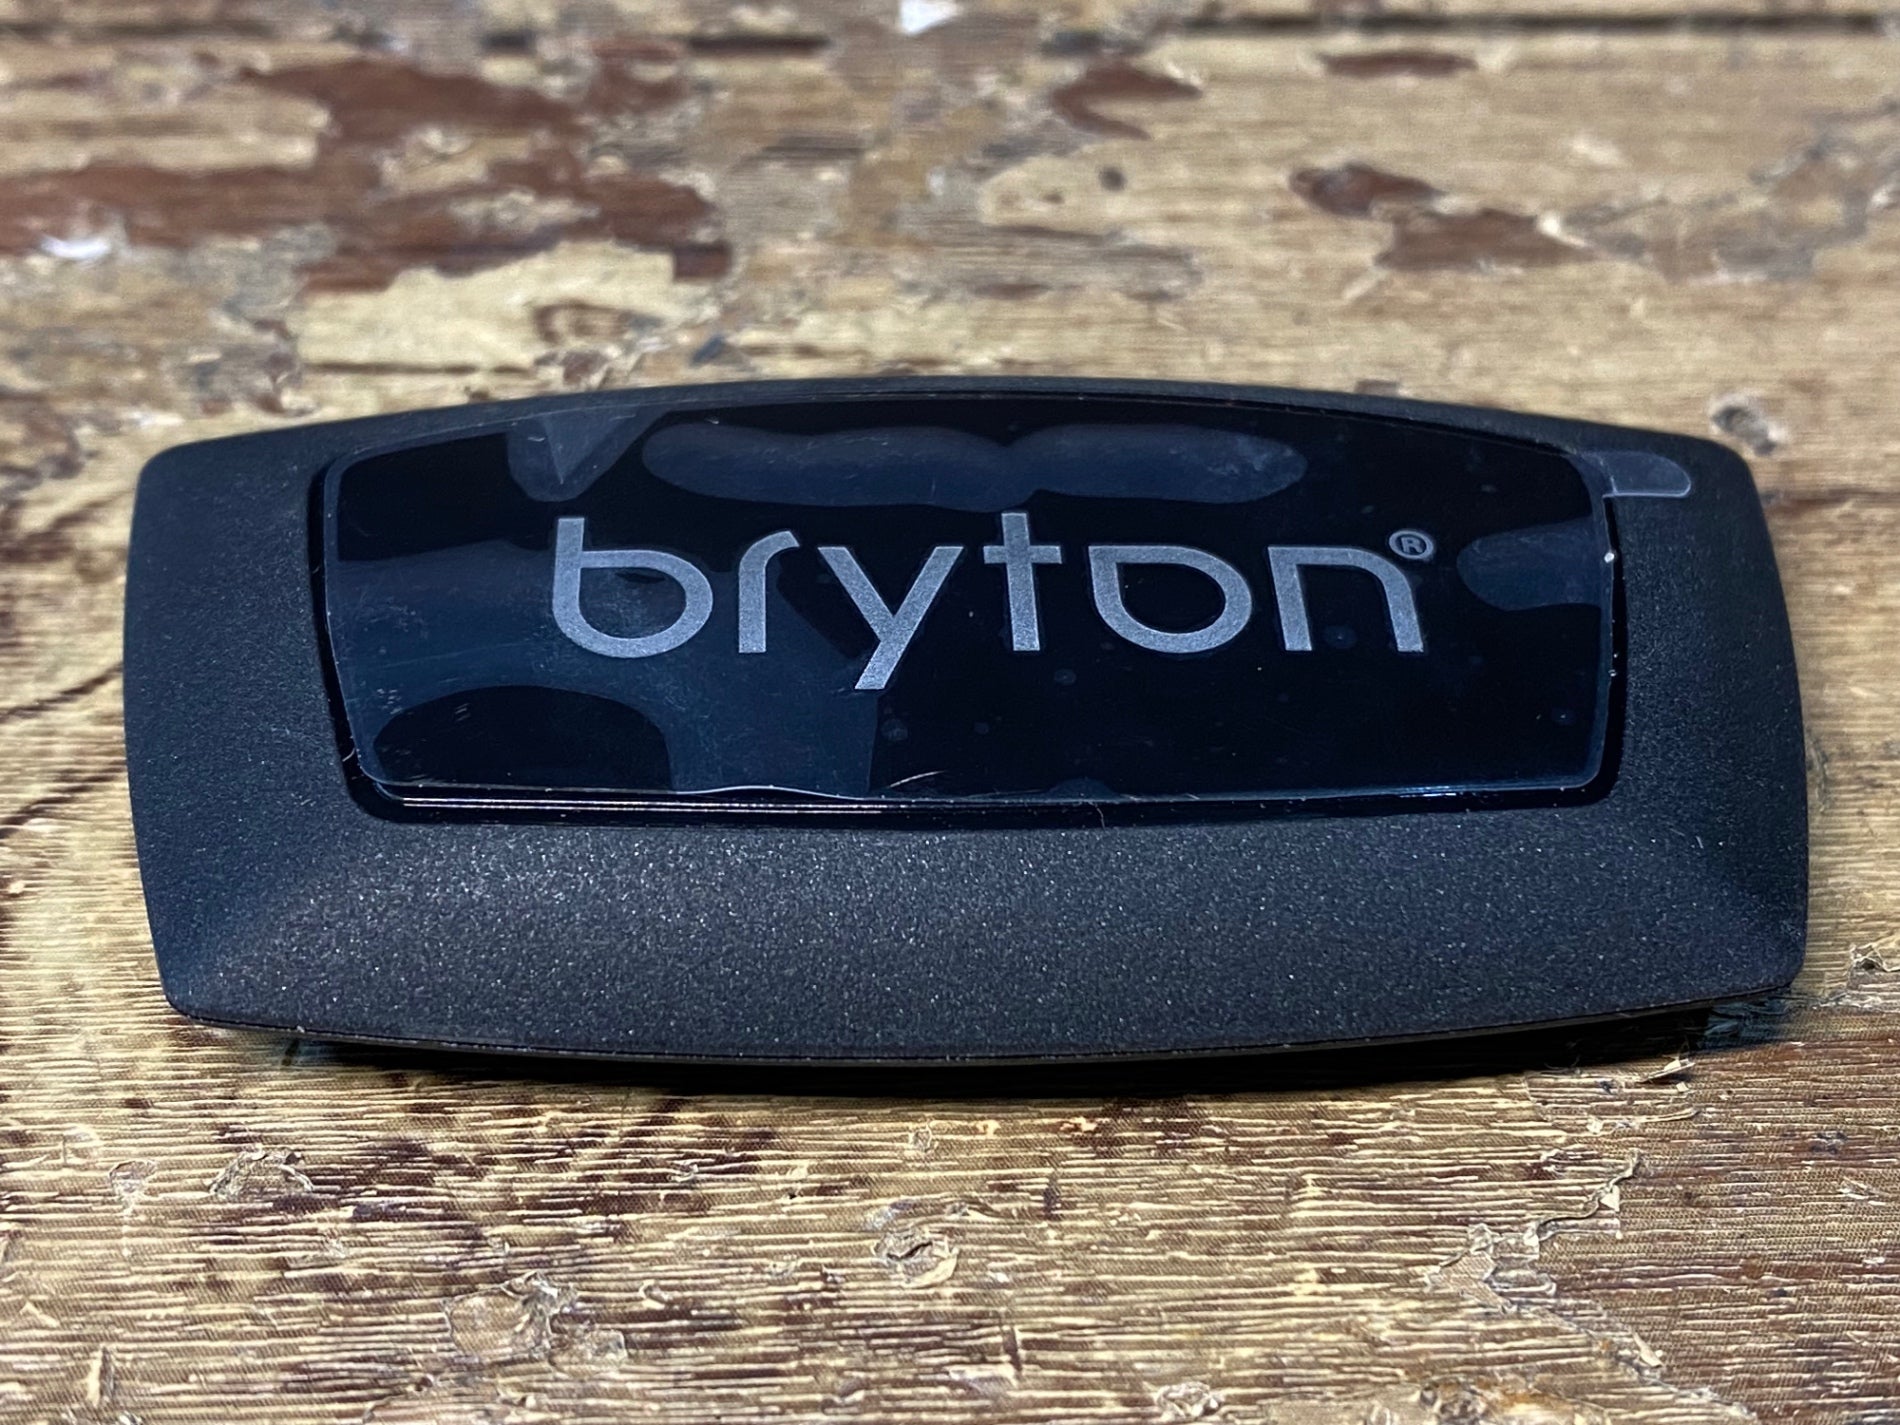 HV612 ブライトン bryton ハートレートセンサー 心拍計 ANT+ Bluetooth